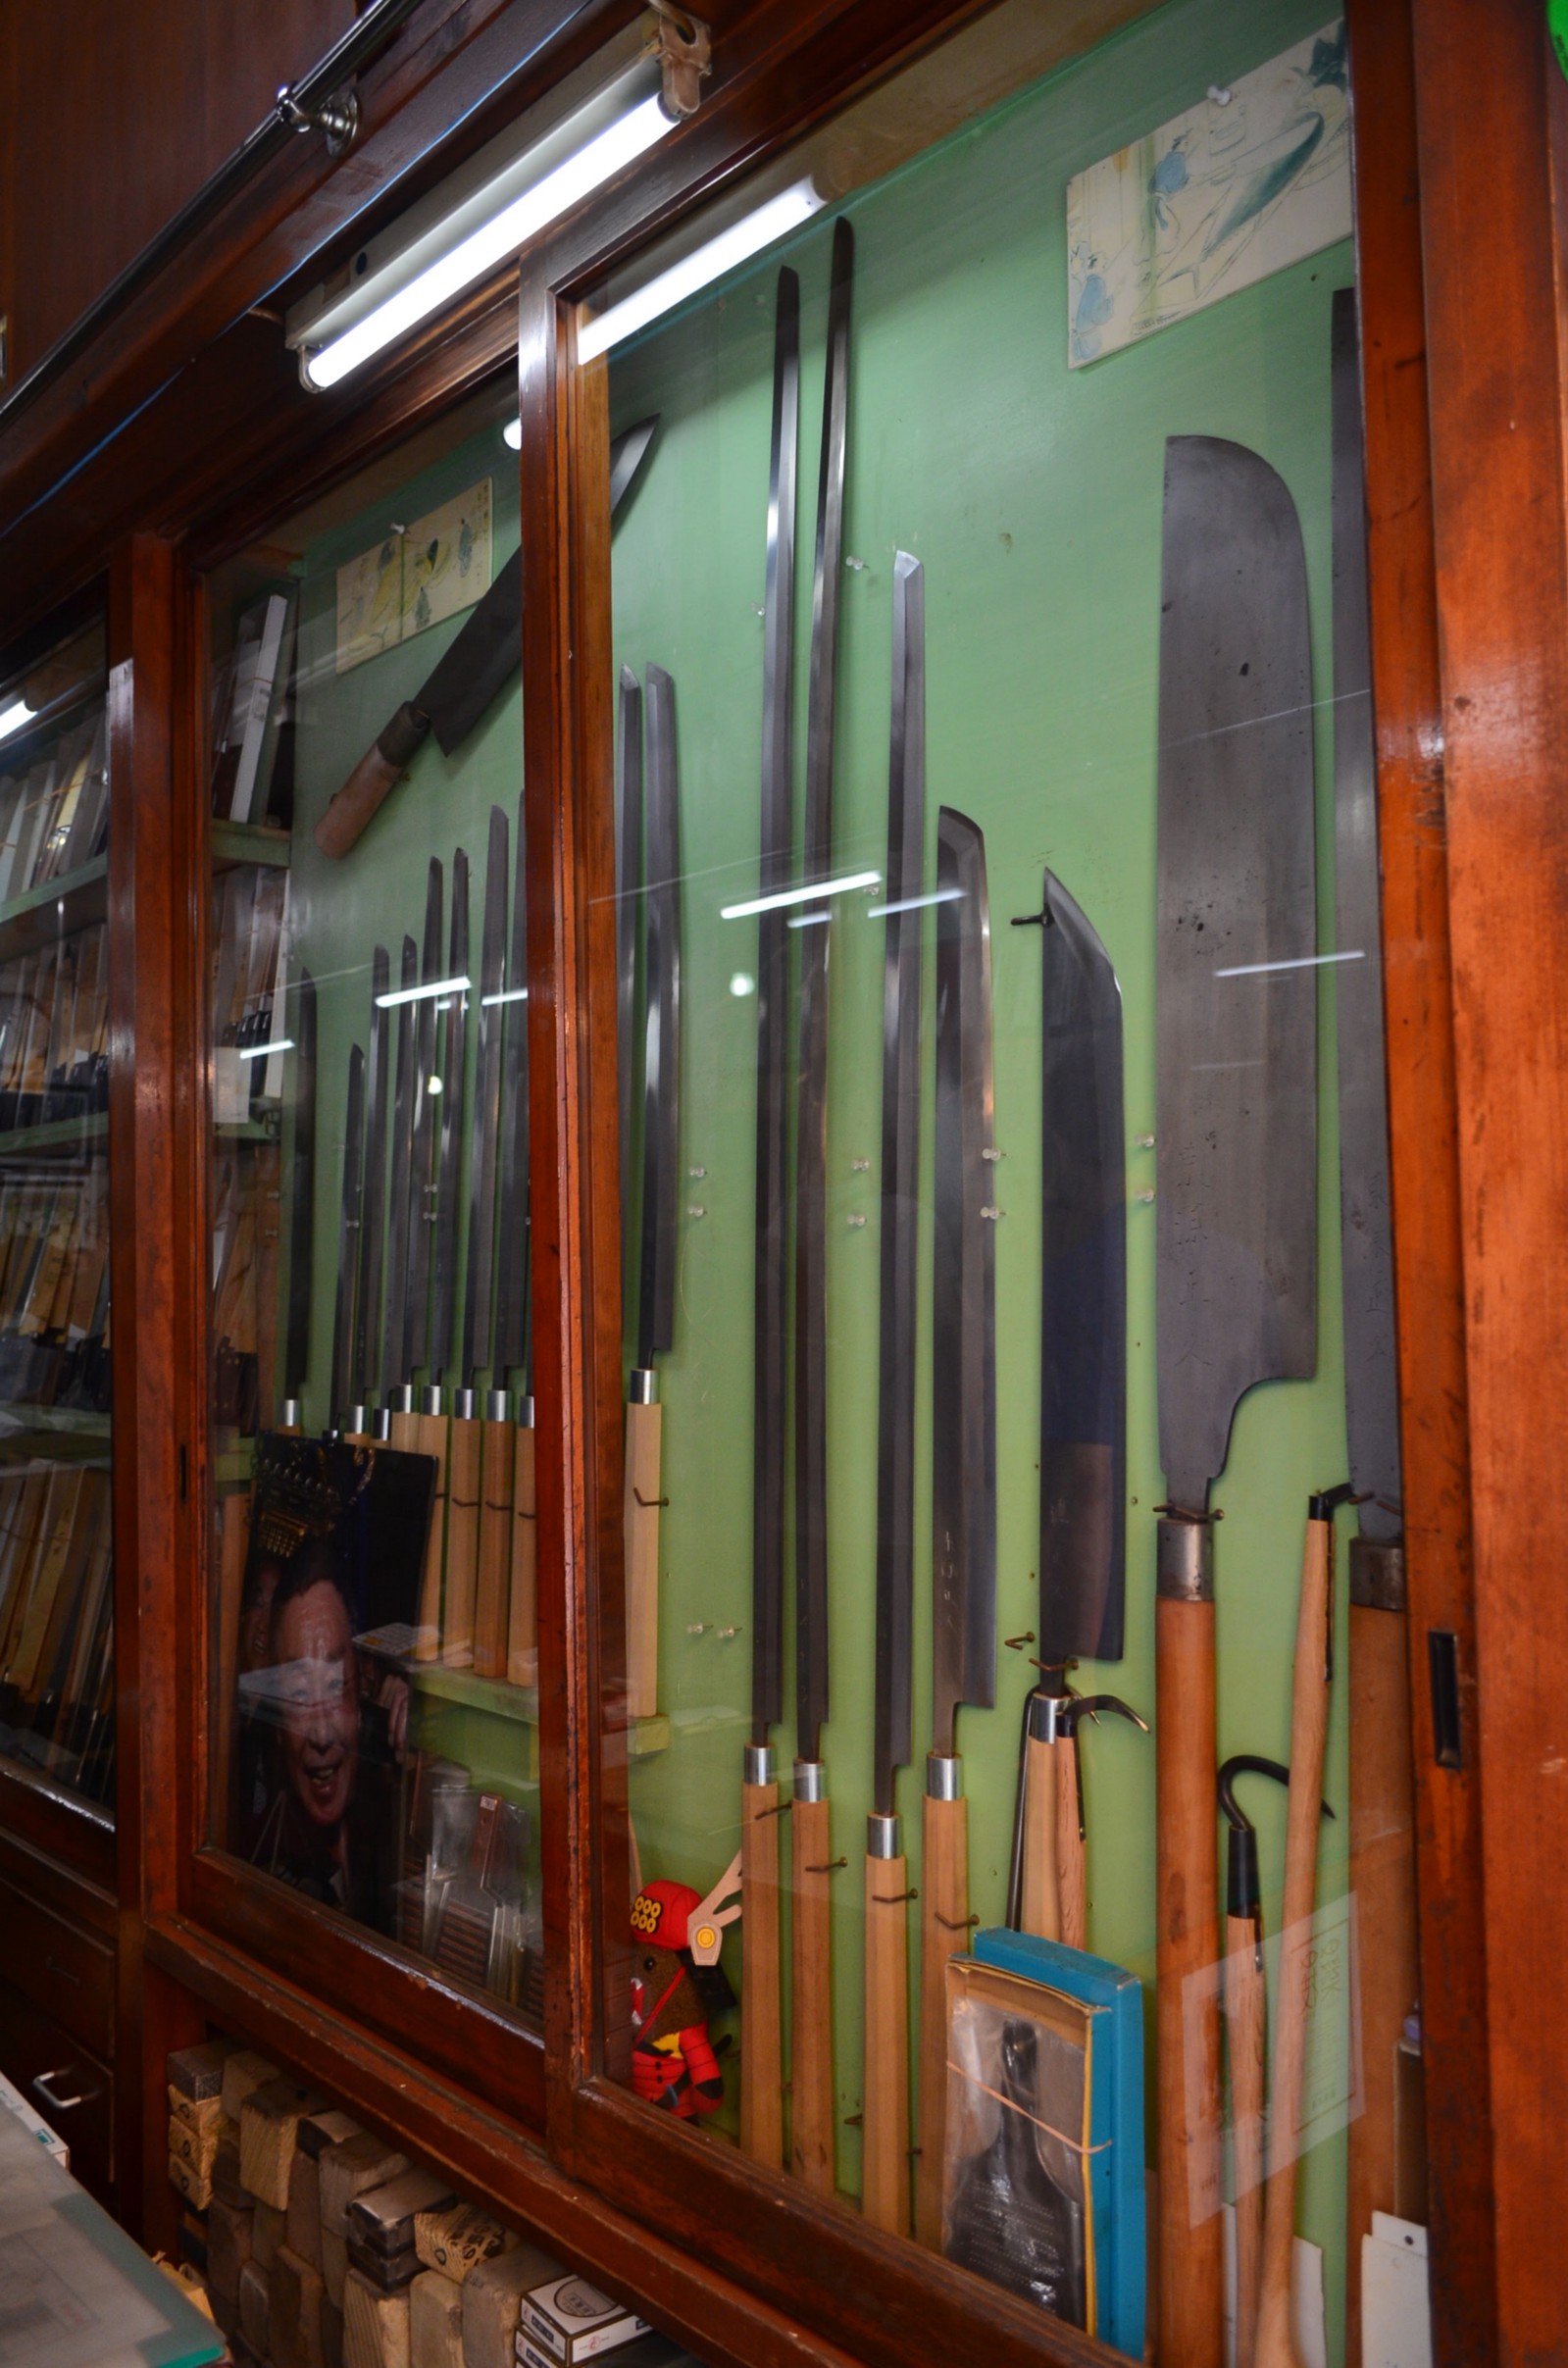 Various Japanese knives displayed at a knive shop in Tokyo